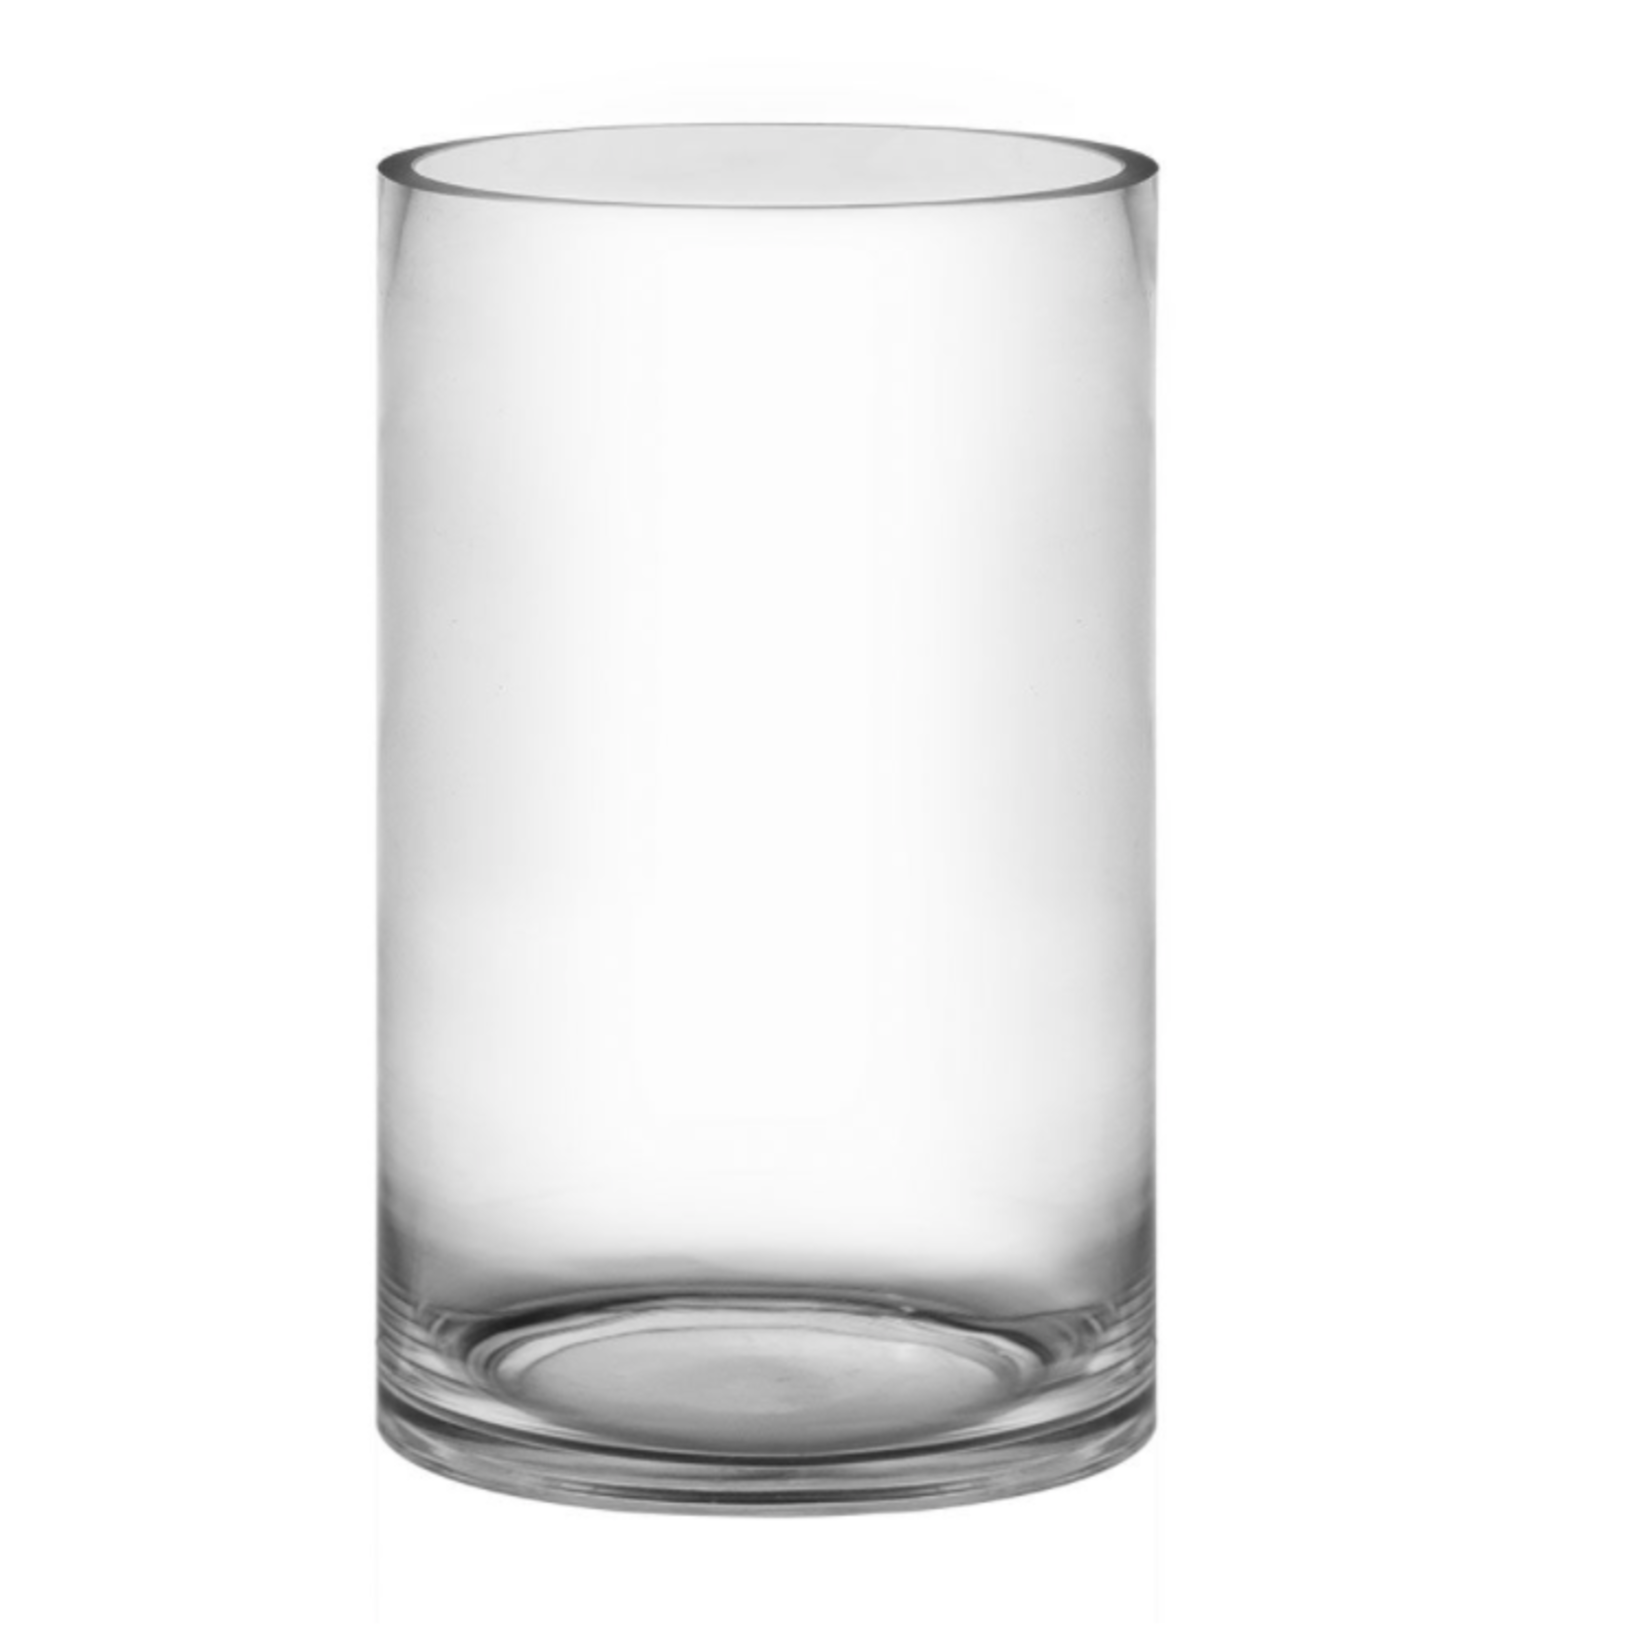 14"H X 6"D CLEAR GLASS CYLINDER VASE